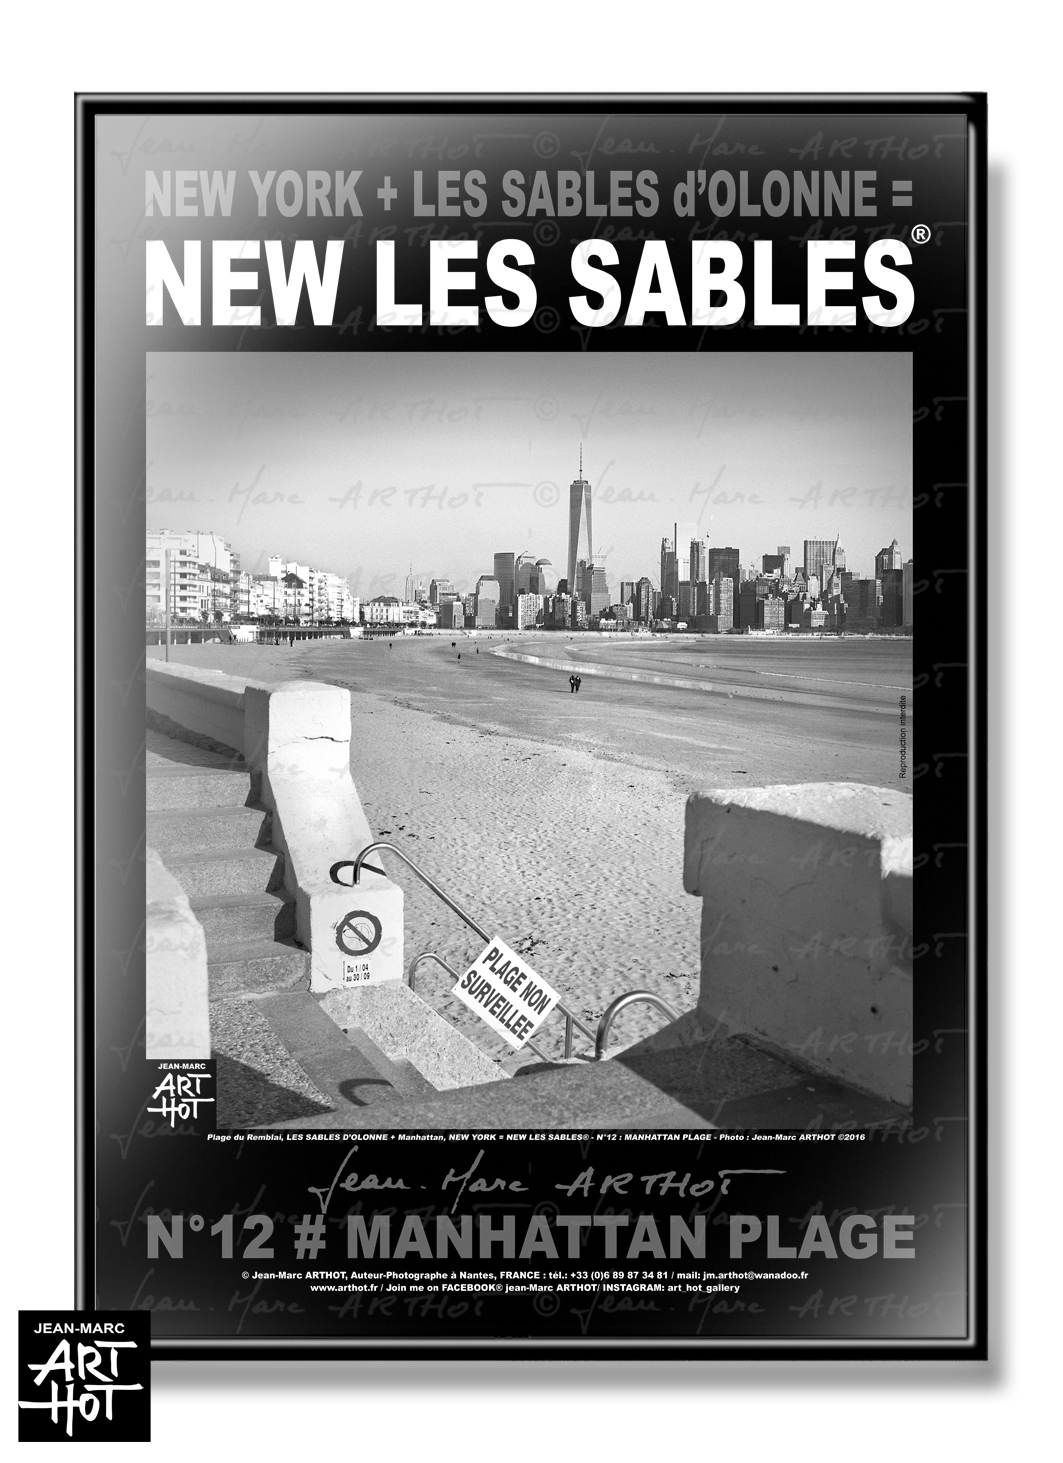 arthot-photo-art-b&w-new-york-vendee-sables-olonne-newlessables-012-plage-AFFICHE